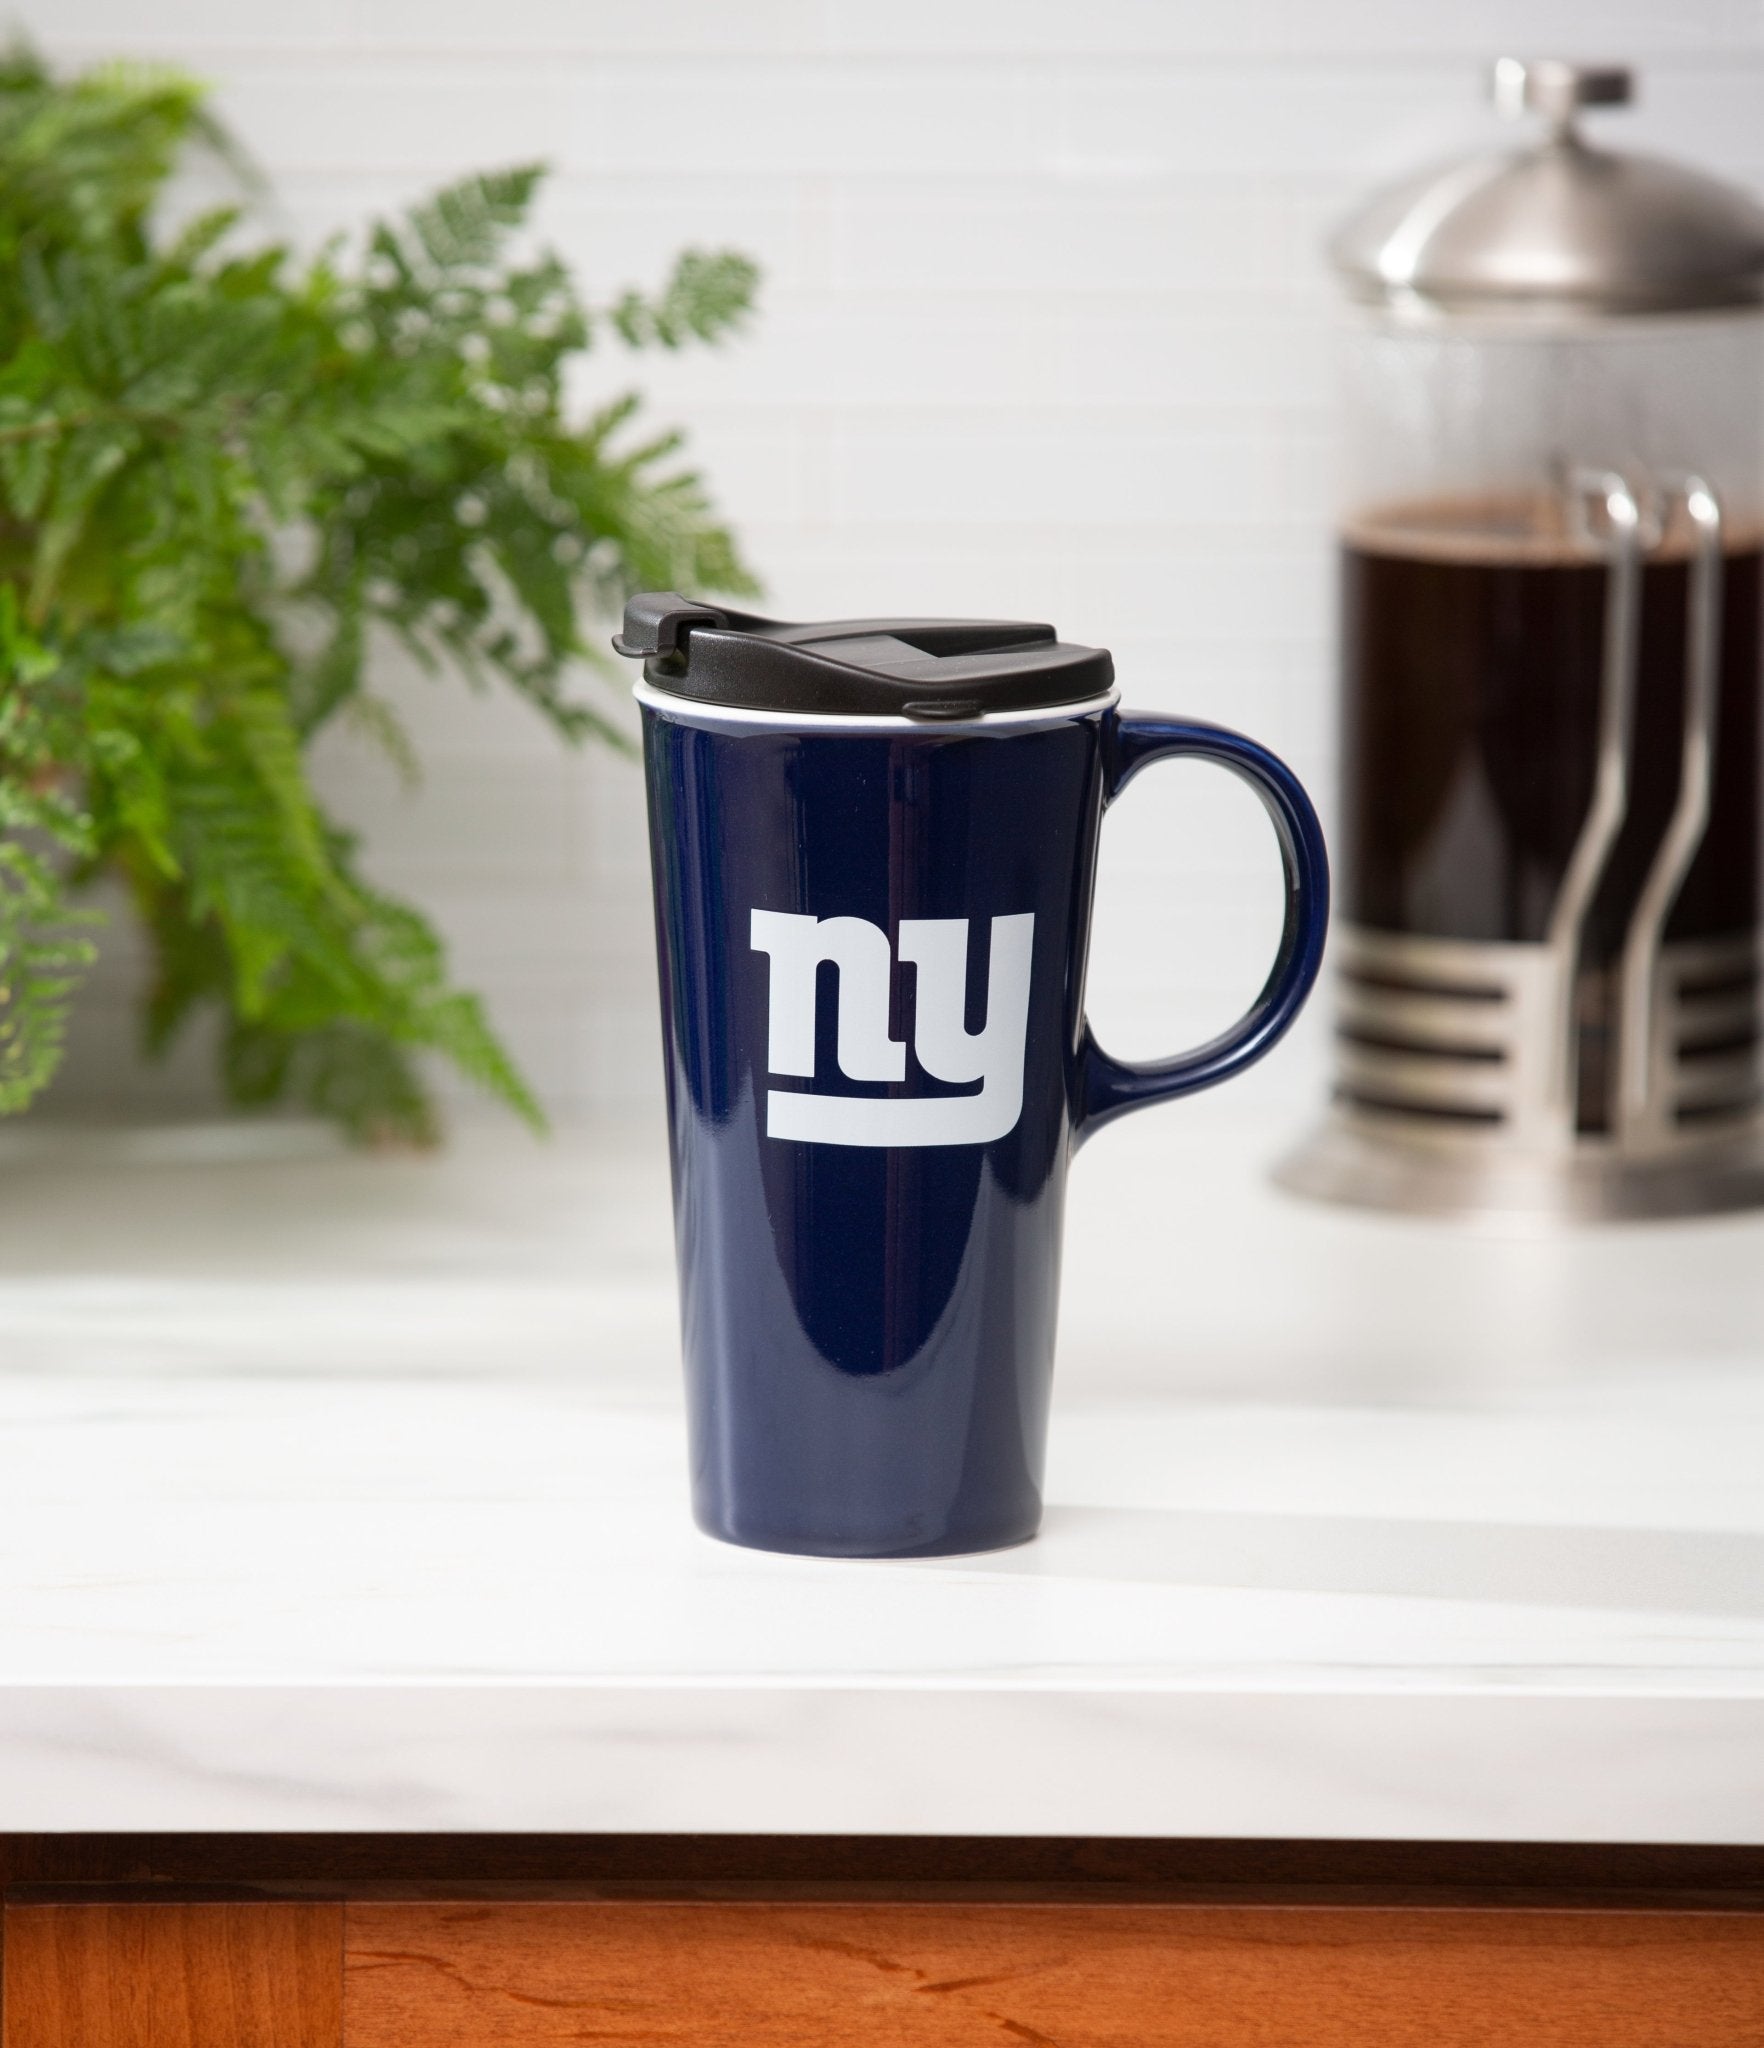 New York Giants Boxed Travel Latte Mug, 17oz